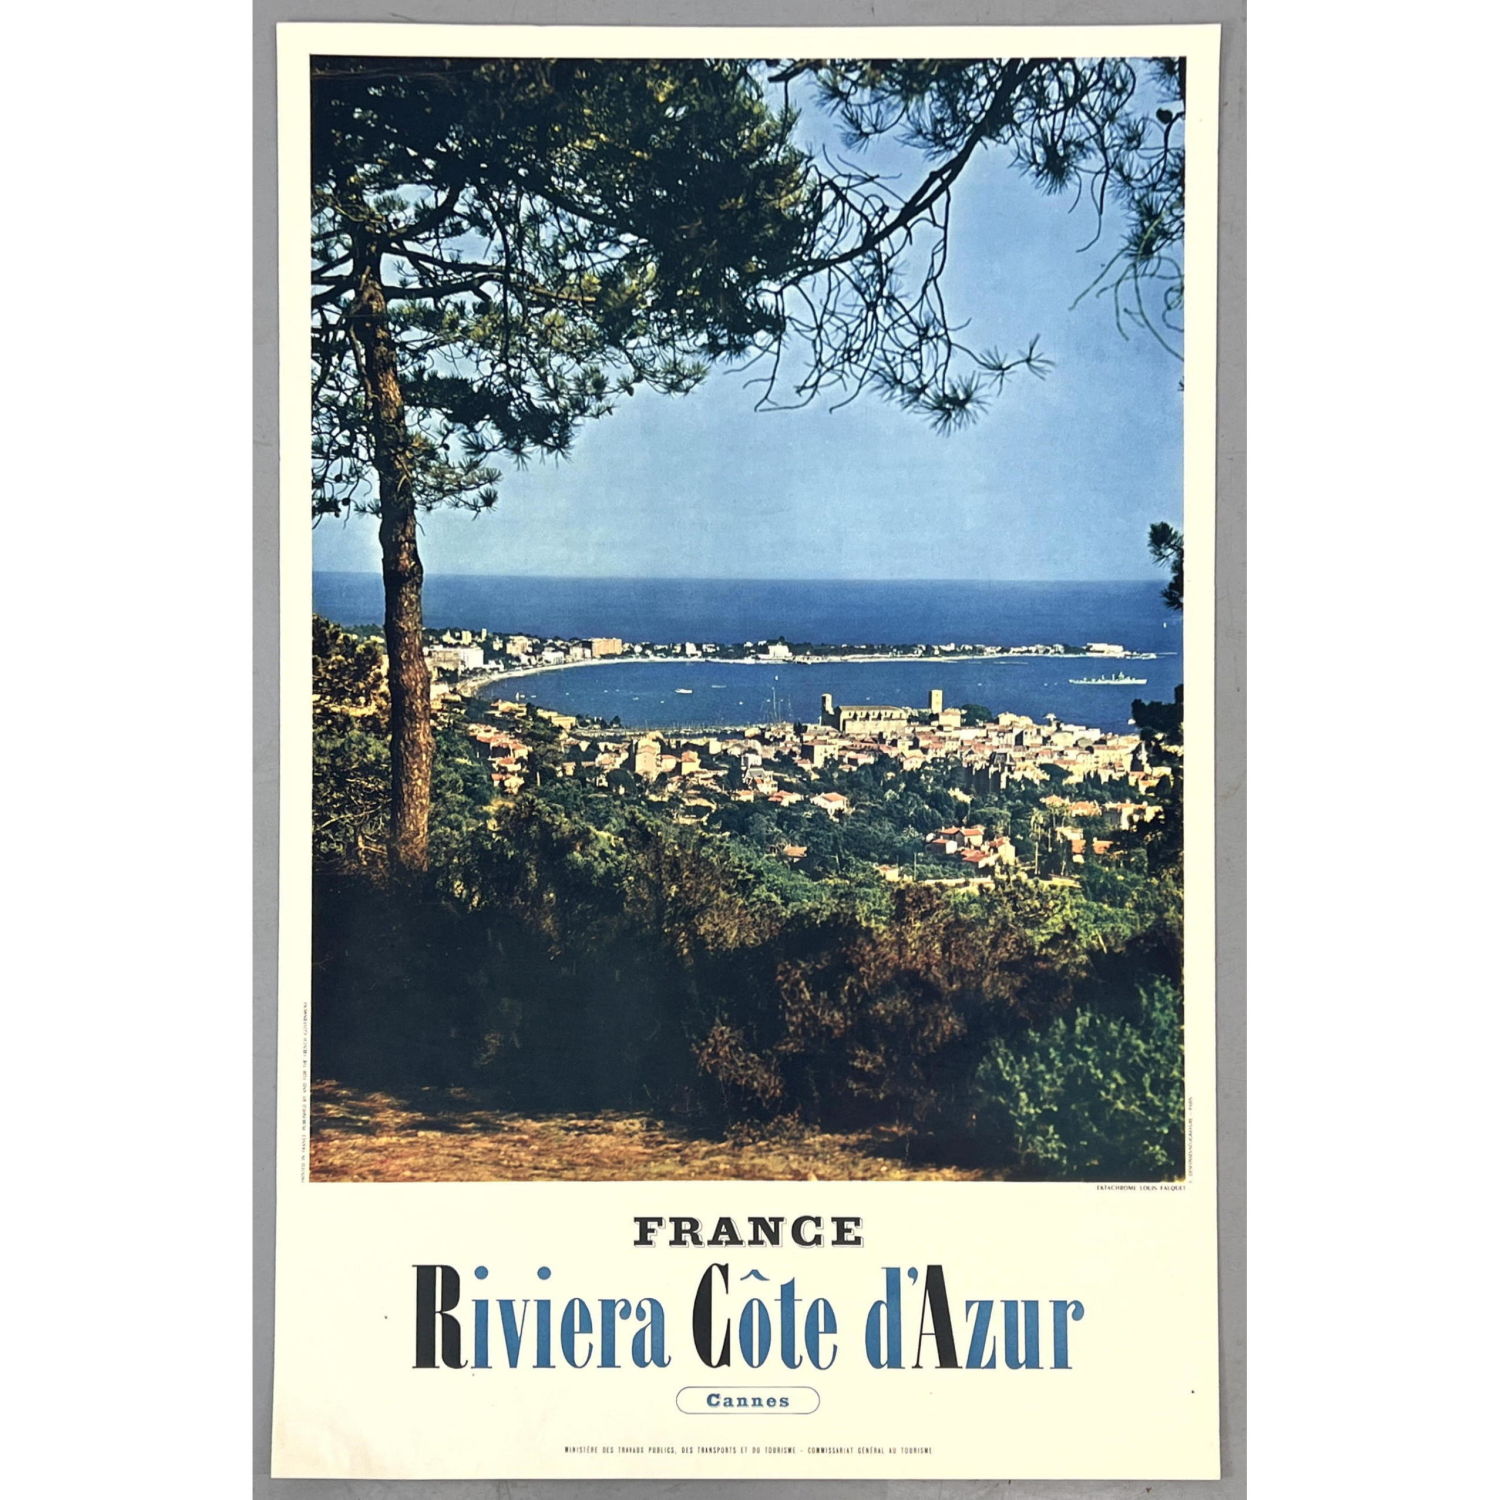 FRANCE Cote D'Azur Travel Advertising